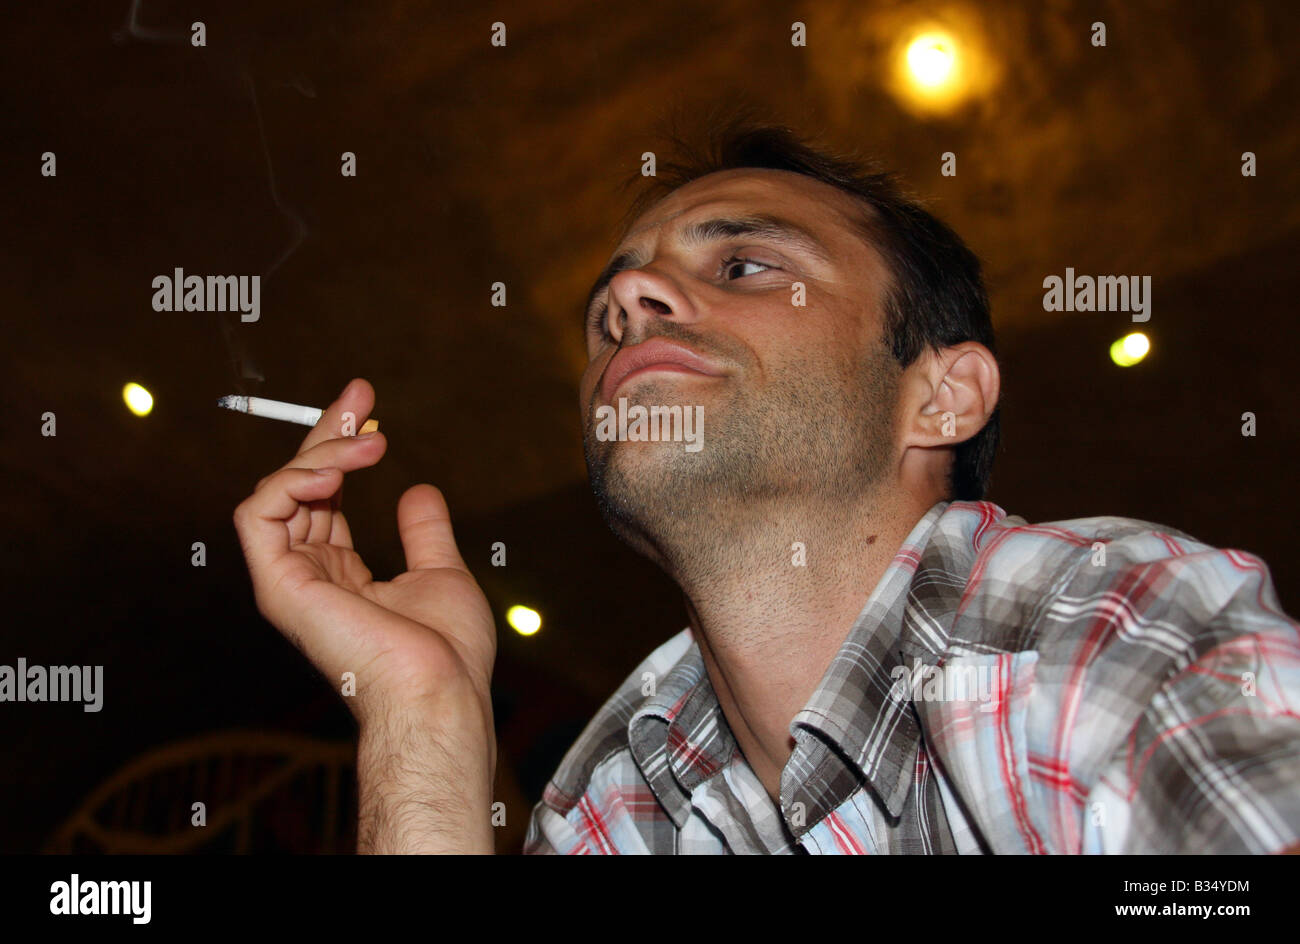 Man enjoying smoking the cigarette. Stock Photo